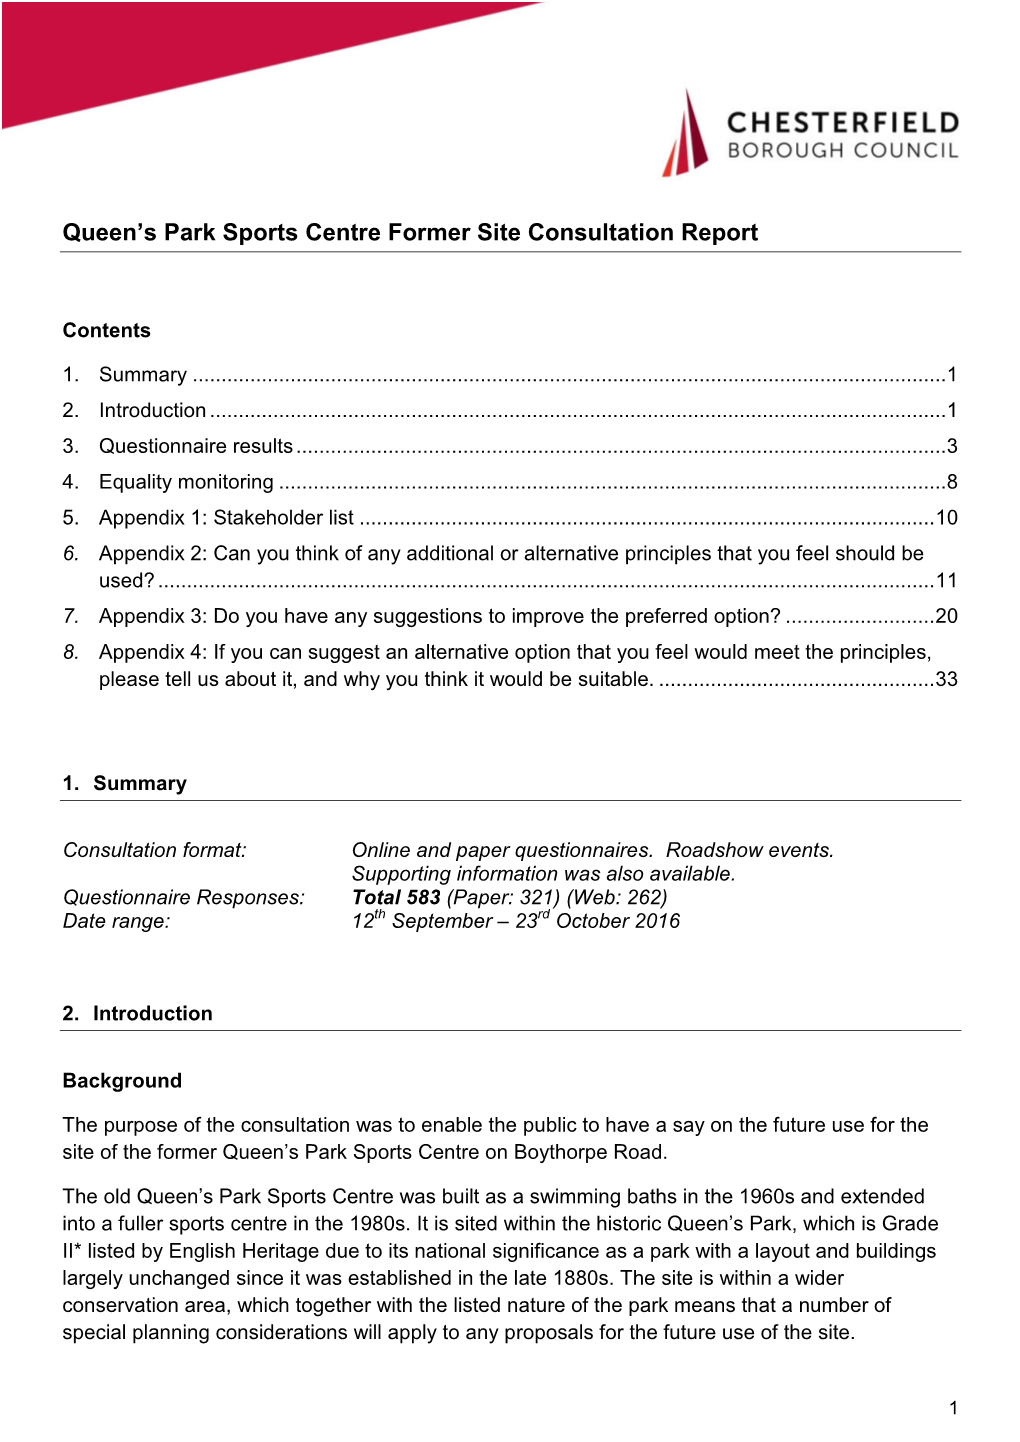 Queen's Park Sports Centre Former Site Consultation Report